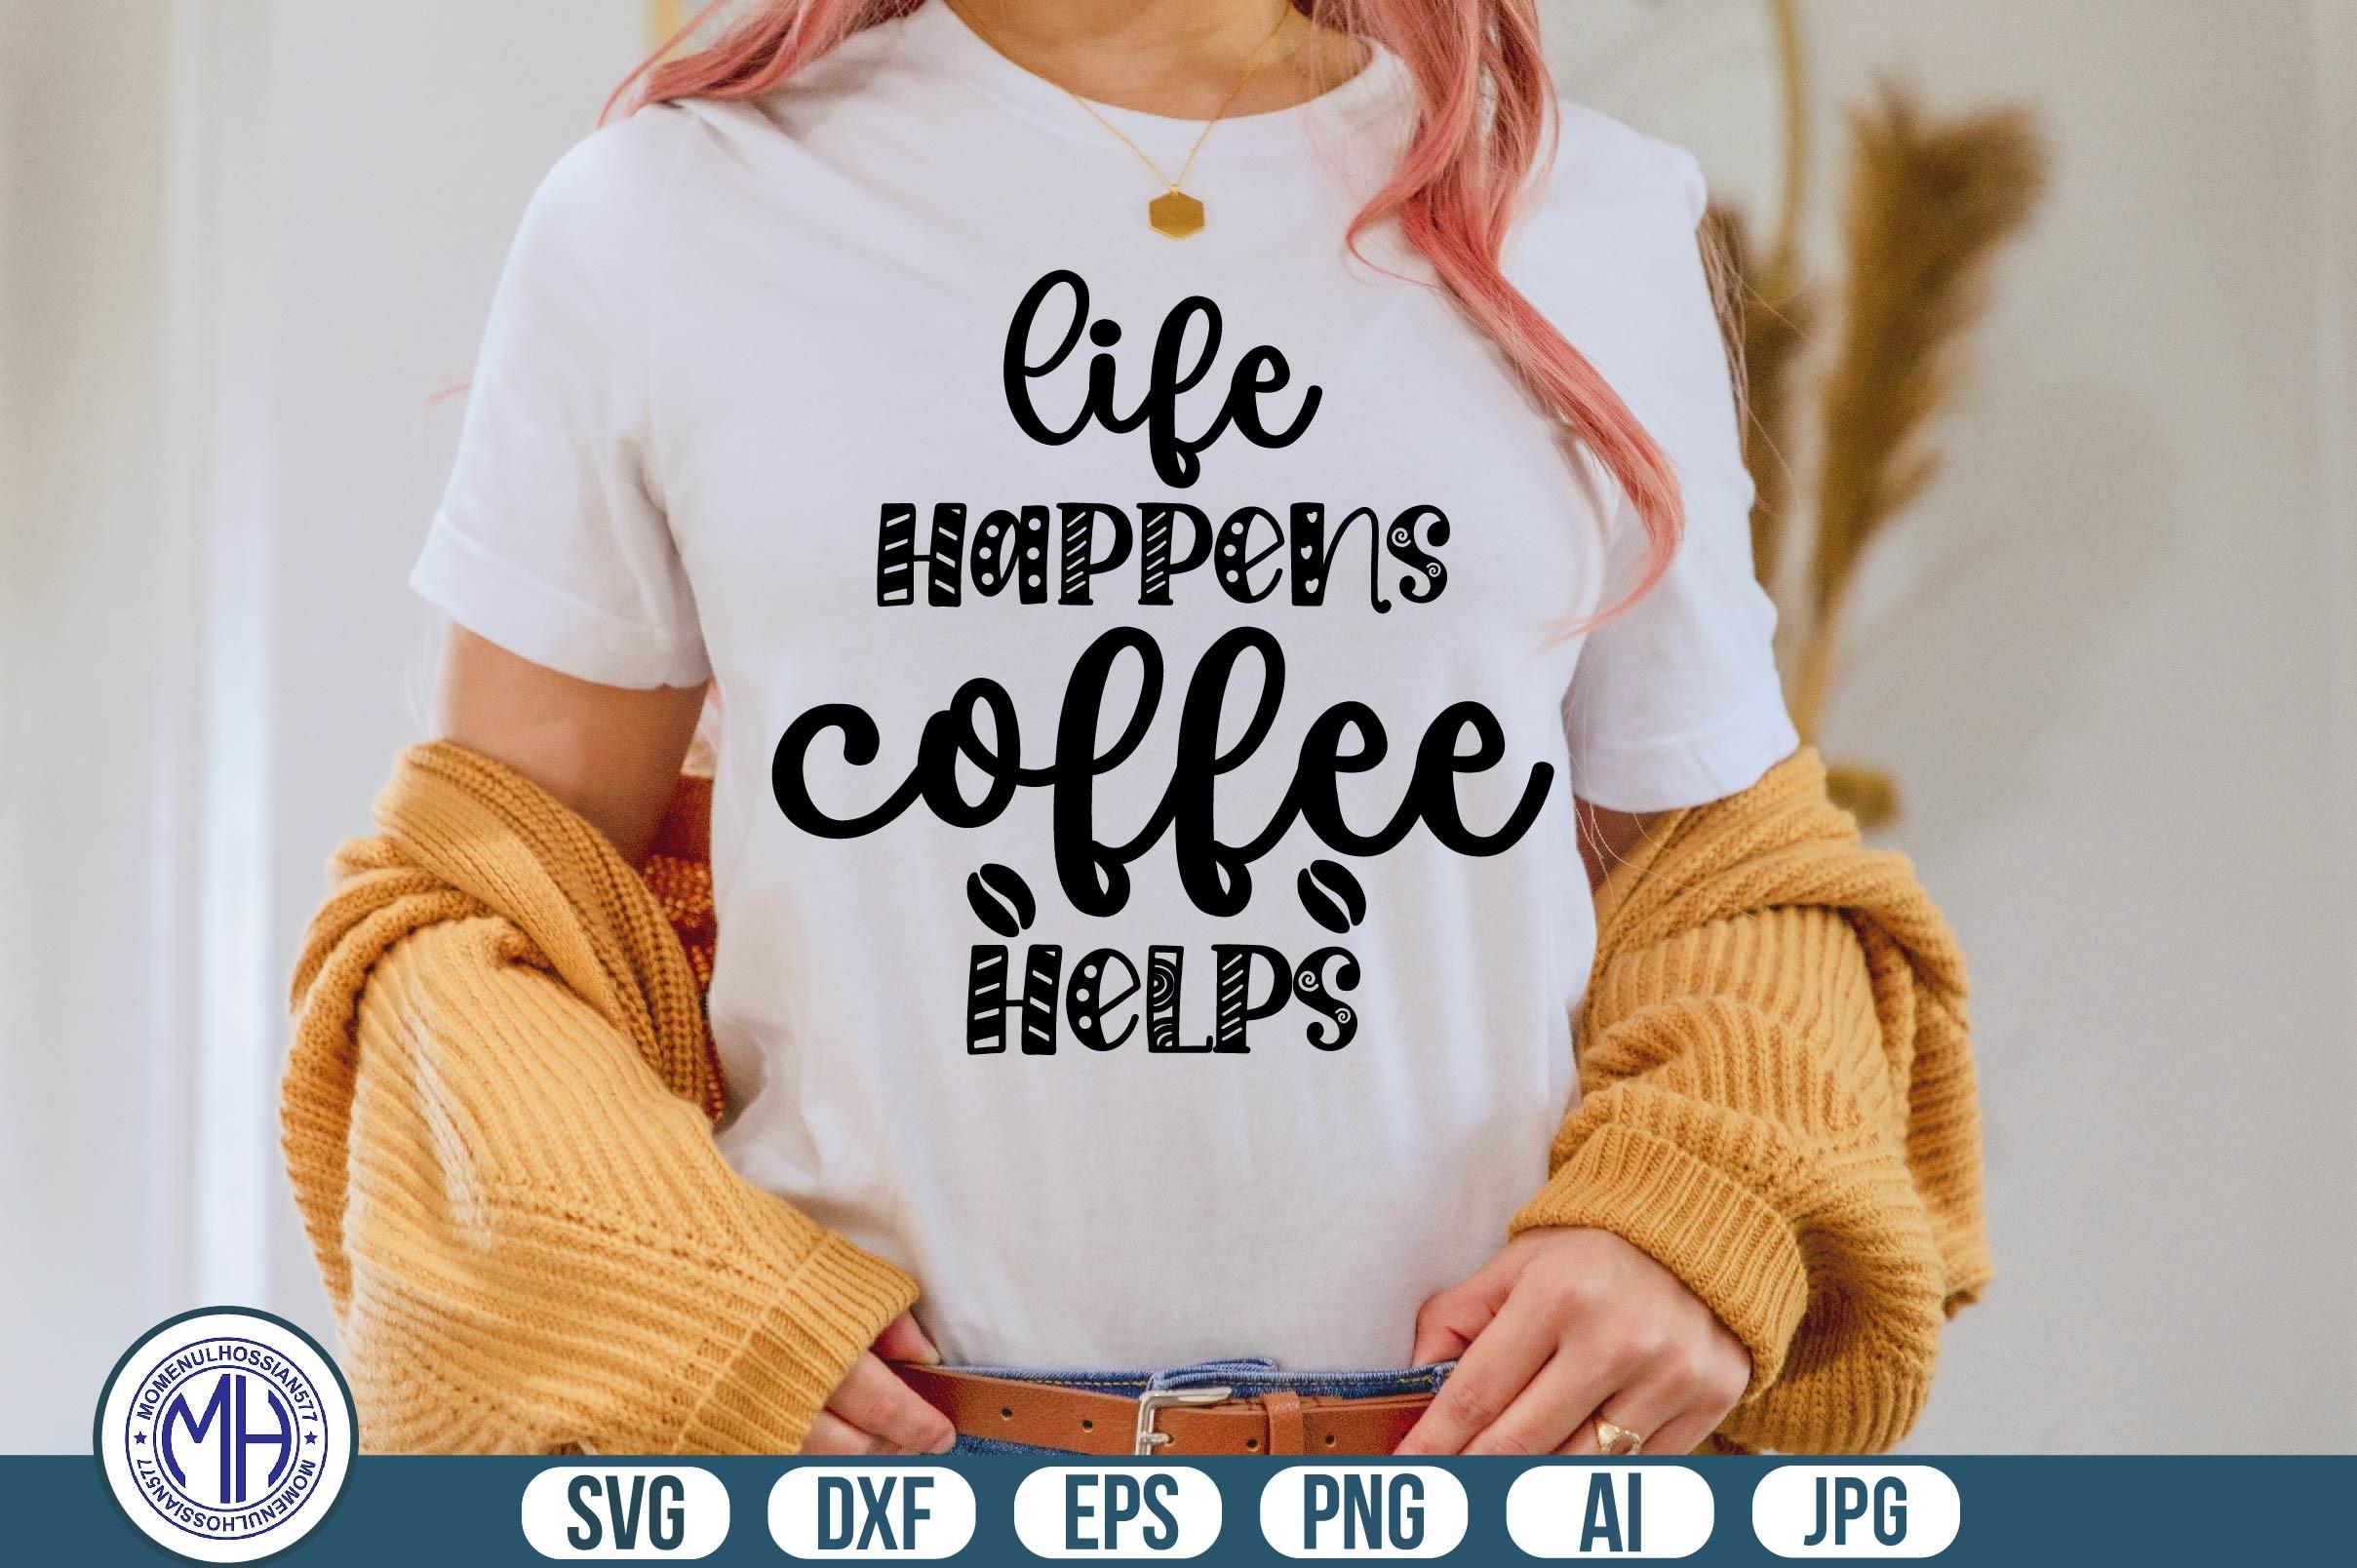 Life Happens Coffee Helps